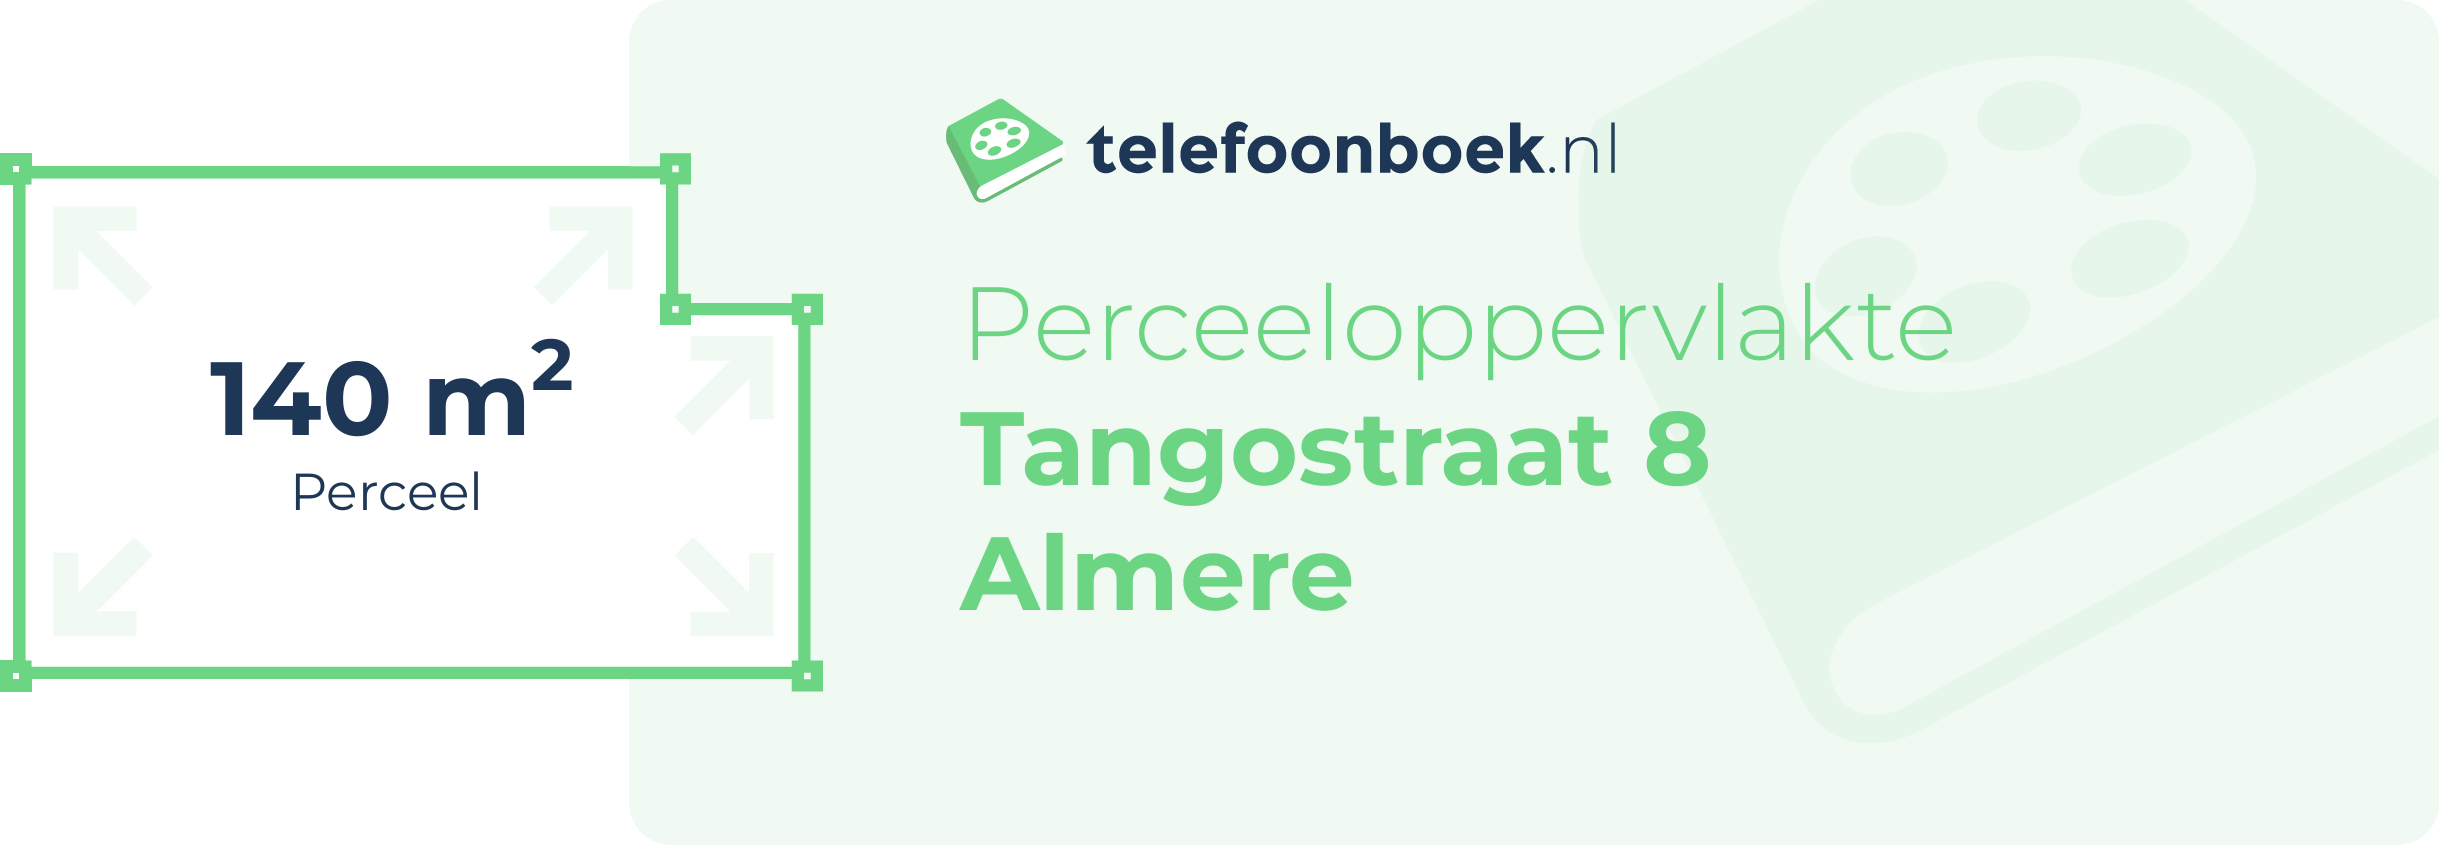 Perceeloppervlakte Tangostraat 8 Almere